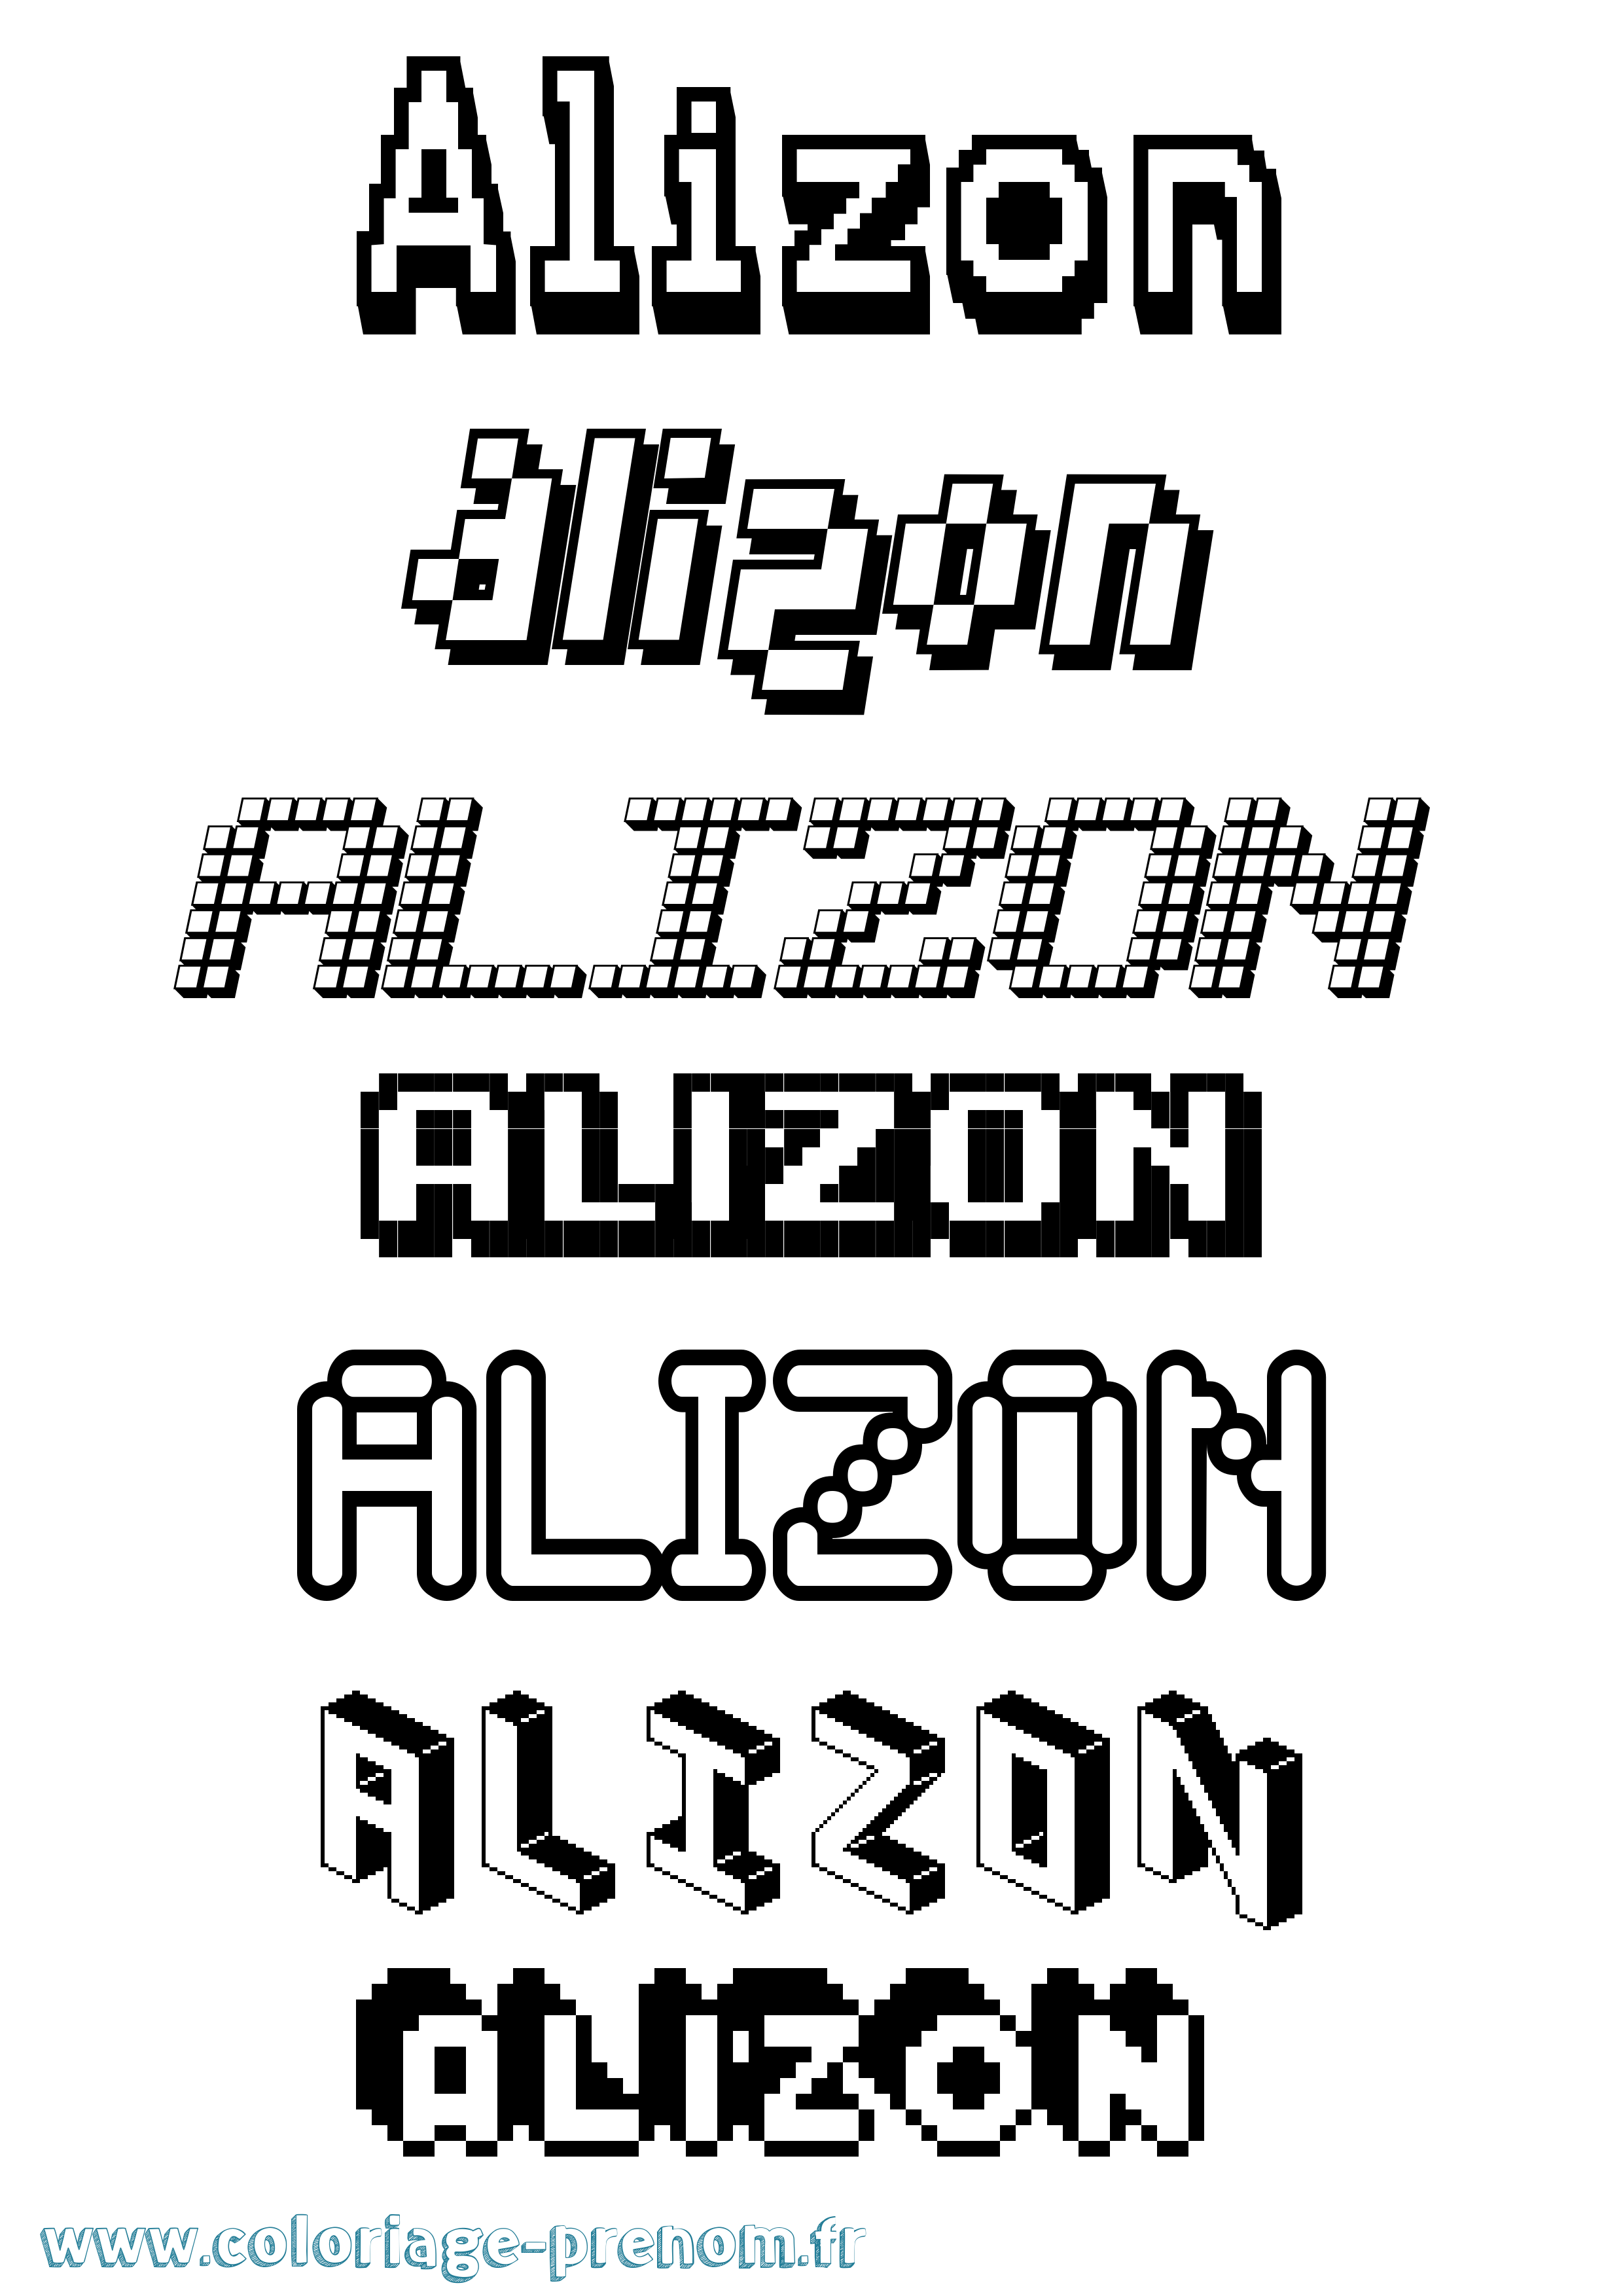 Coloriage prénom Alizon Pixel